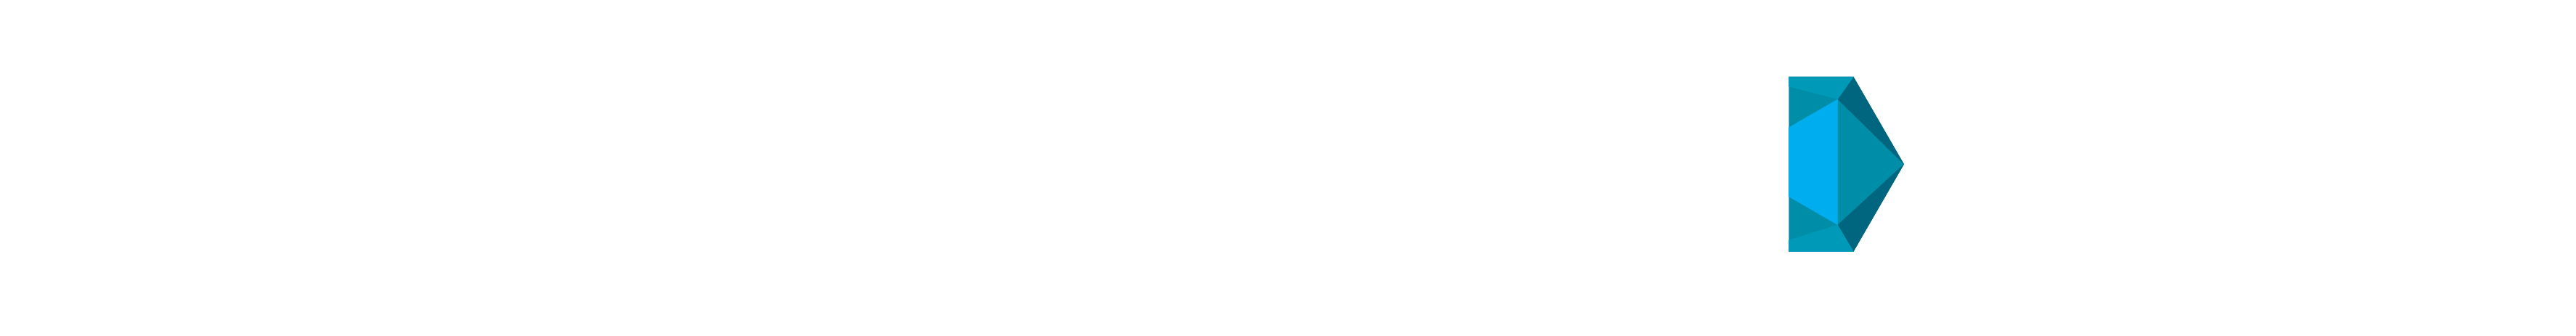 Sprites and Dice Logo